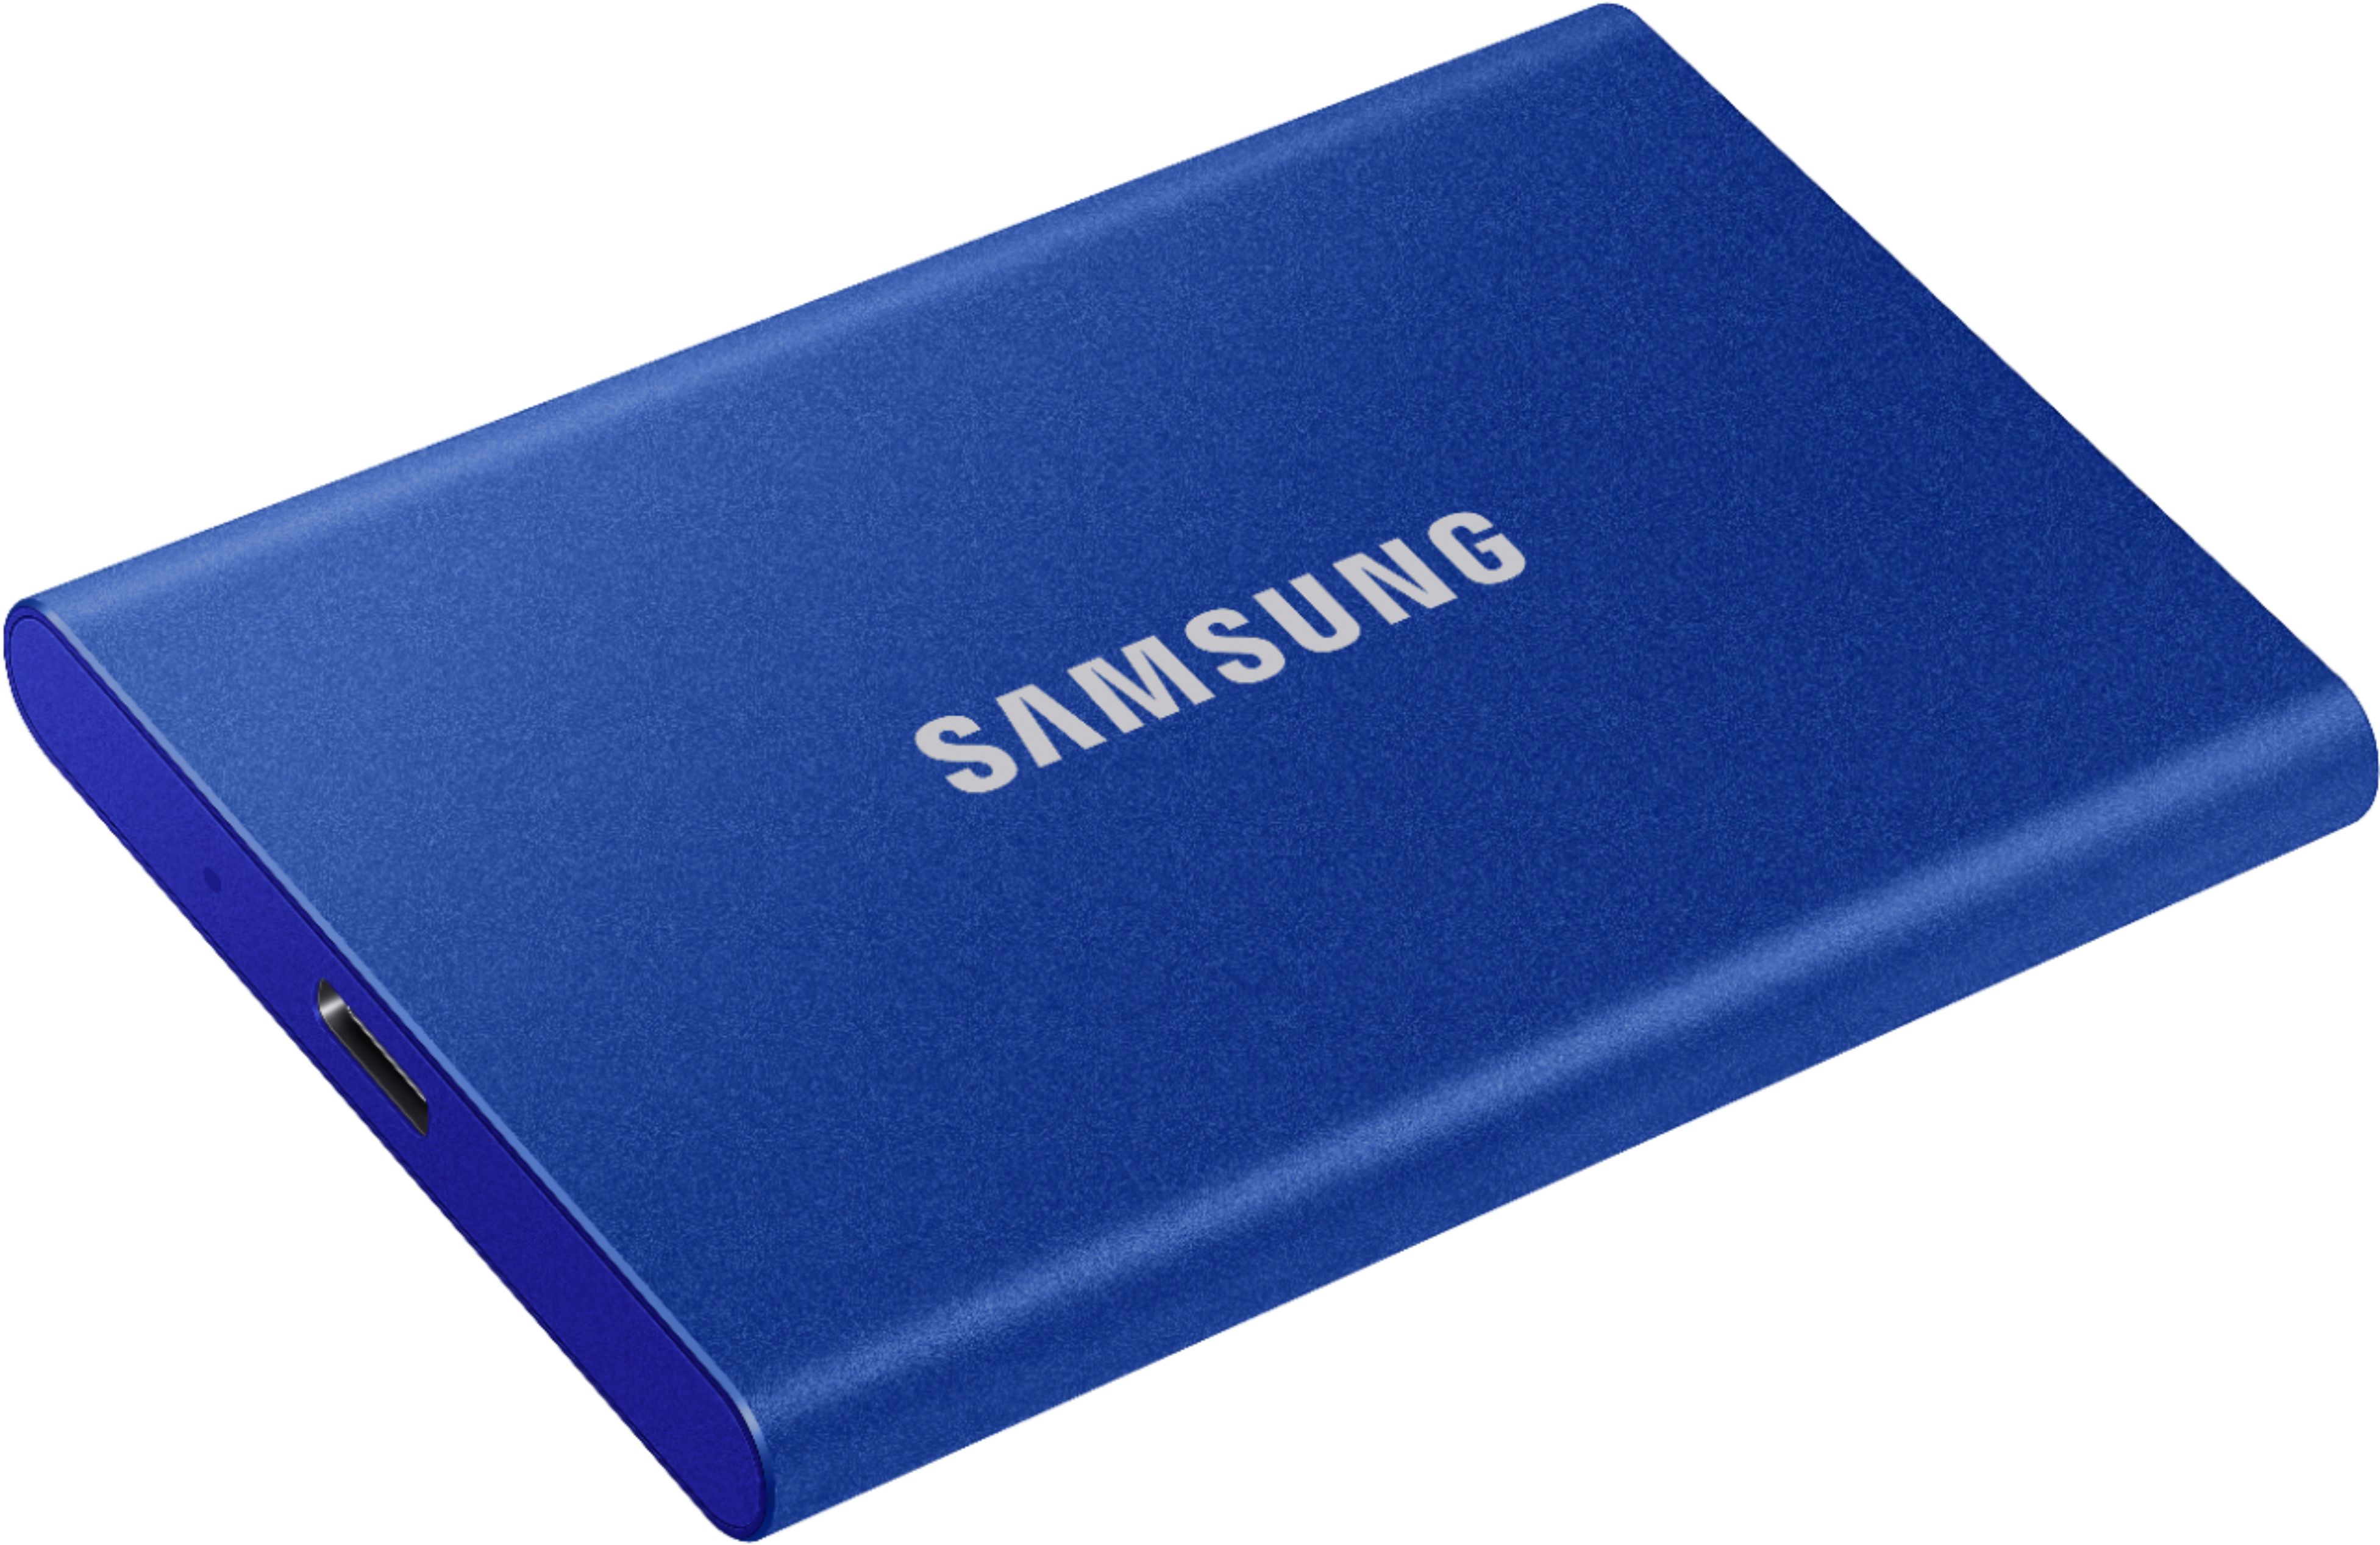 Samsung T7 Shield Portable SSD 1 TB - USB 3.2 Gen.2 External SSD